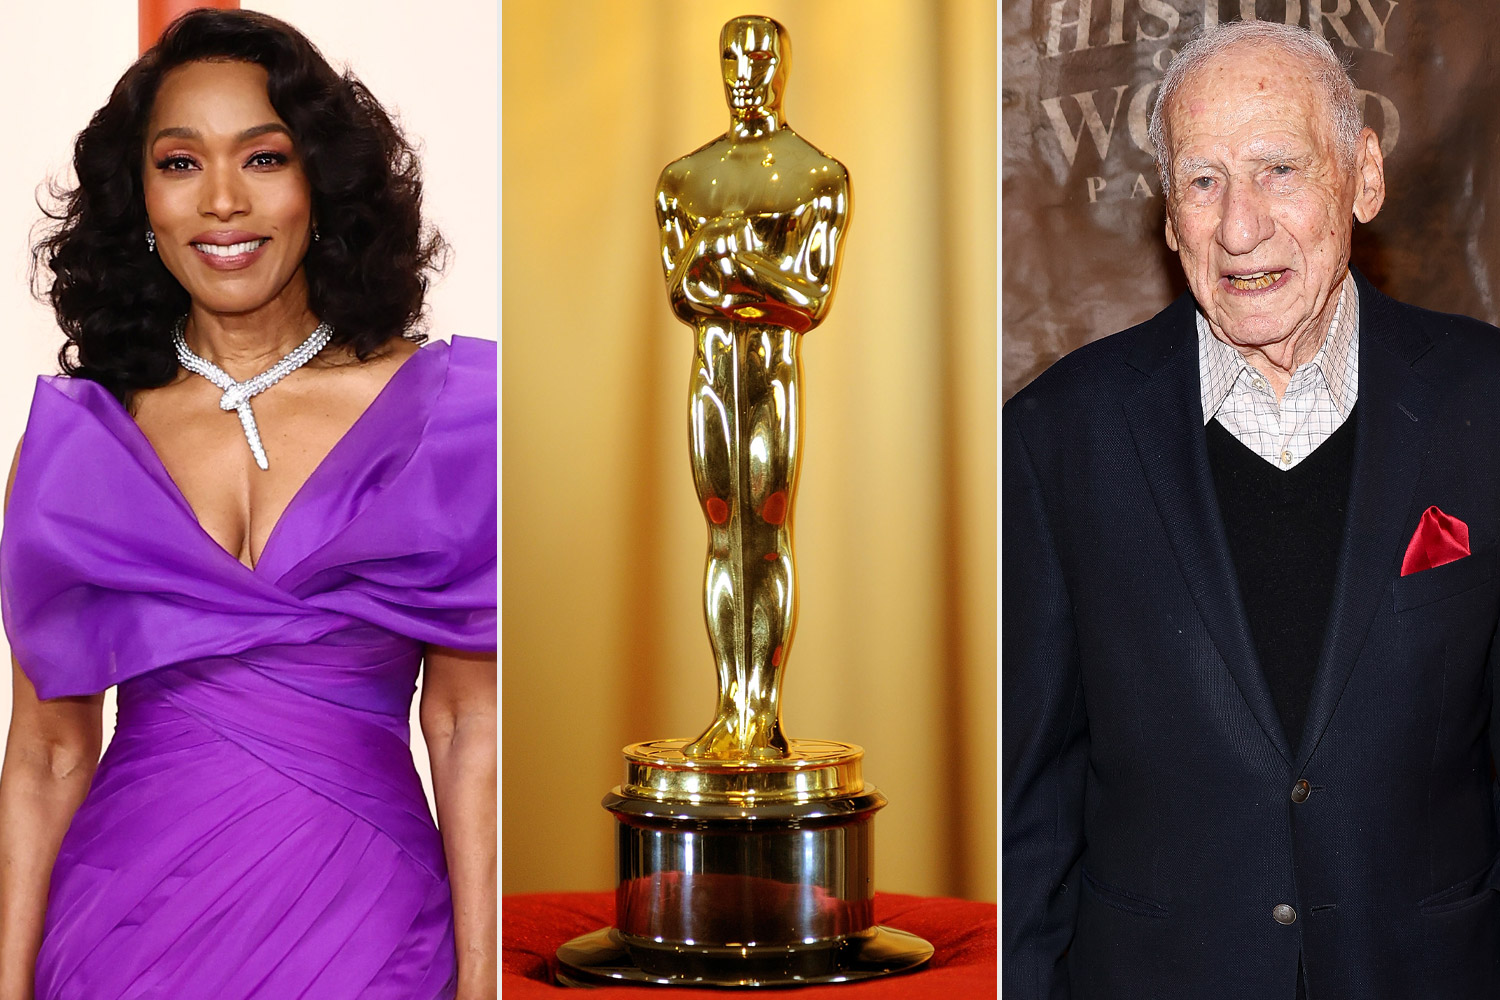 Angela Bassett, Mel Brooks to receive honorary Oscars